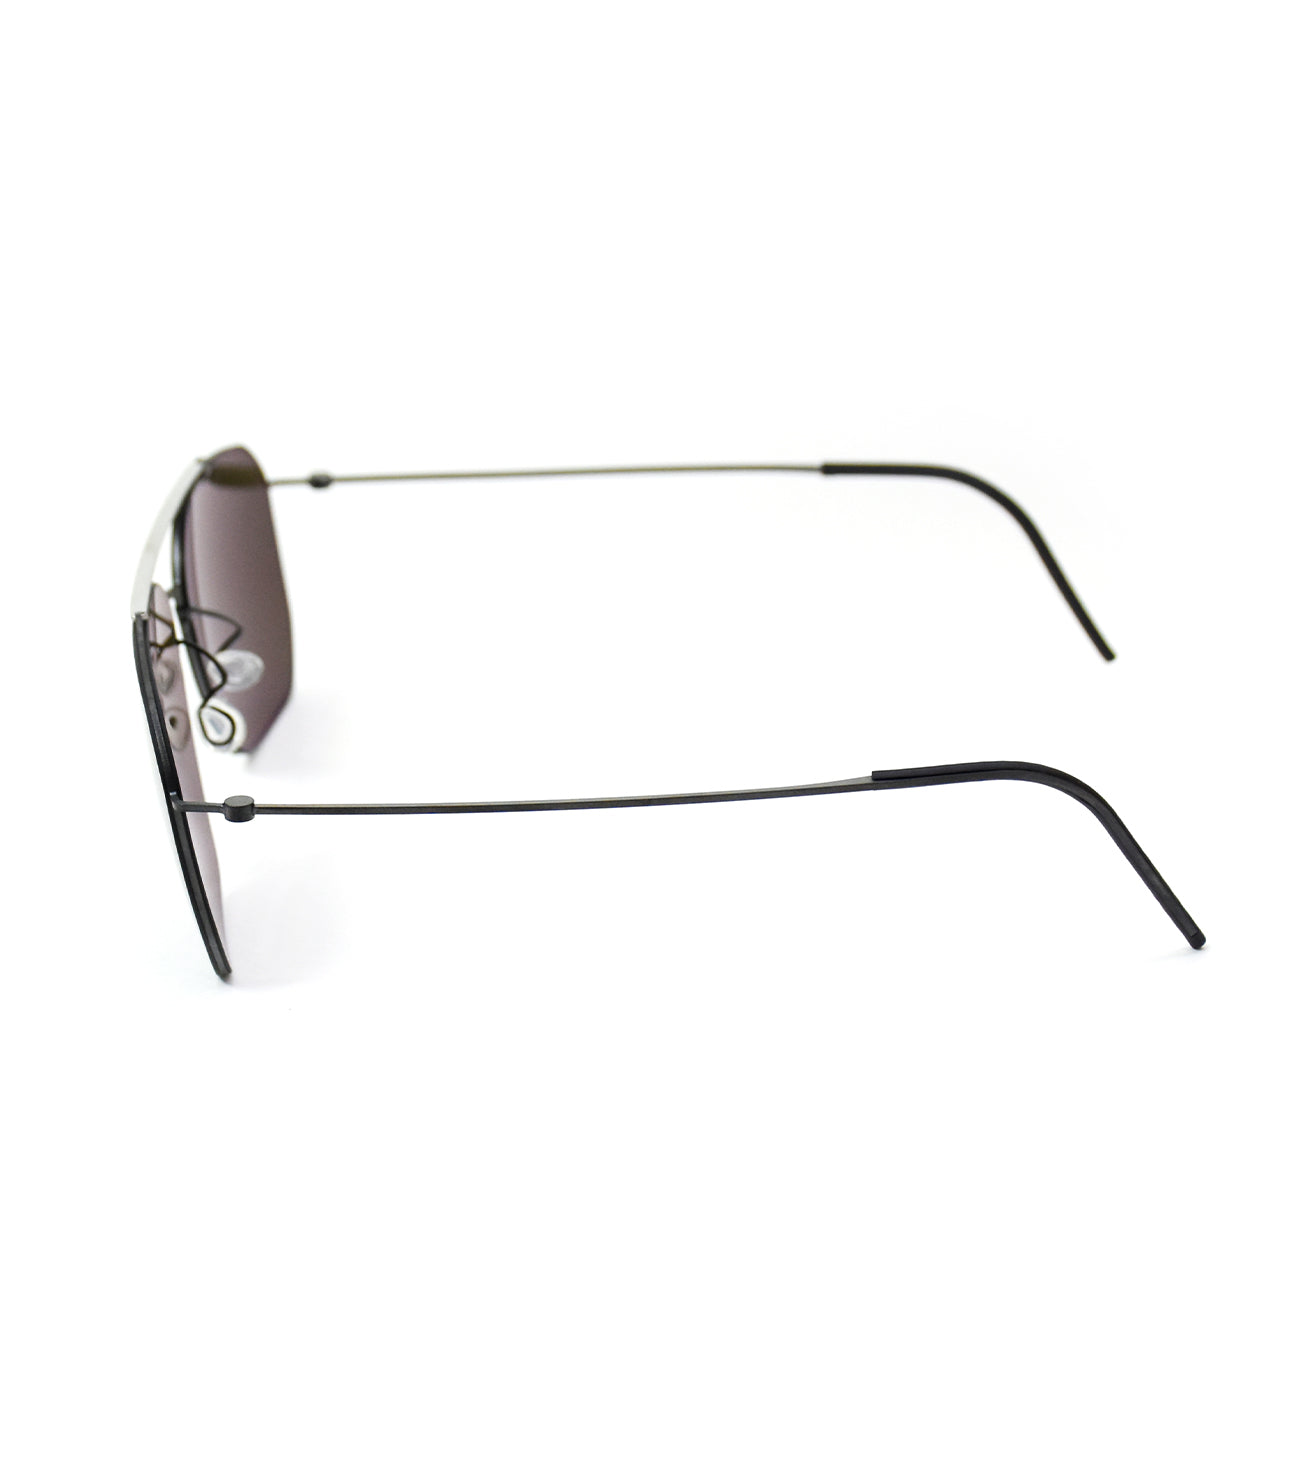 Lindberg Unisex Grey Aviator Sunglasses